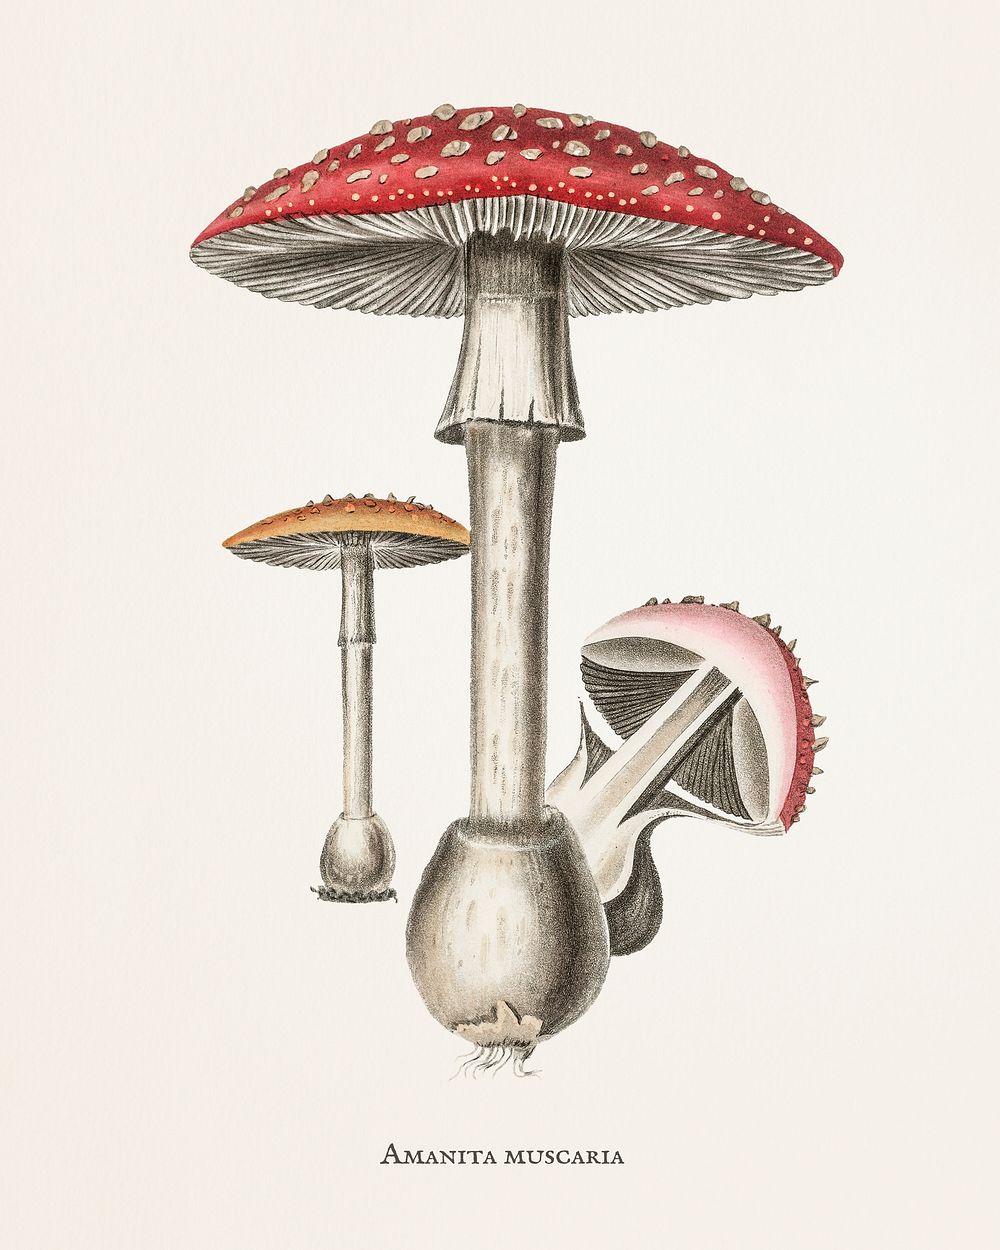 Amanita muscaria illustration from Medical Botany (1836) by John Stephenson and James Morss Churchill.